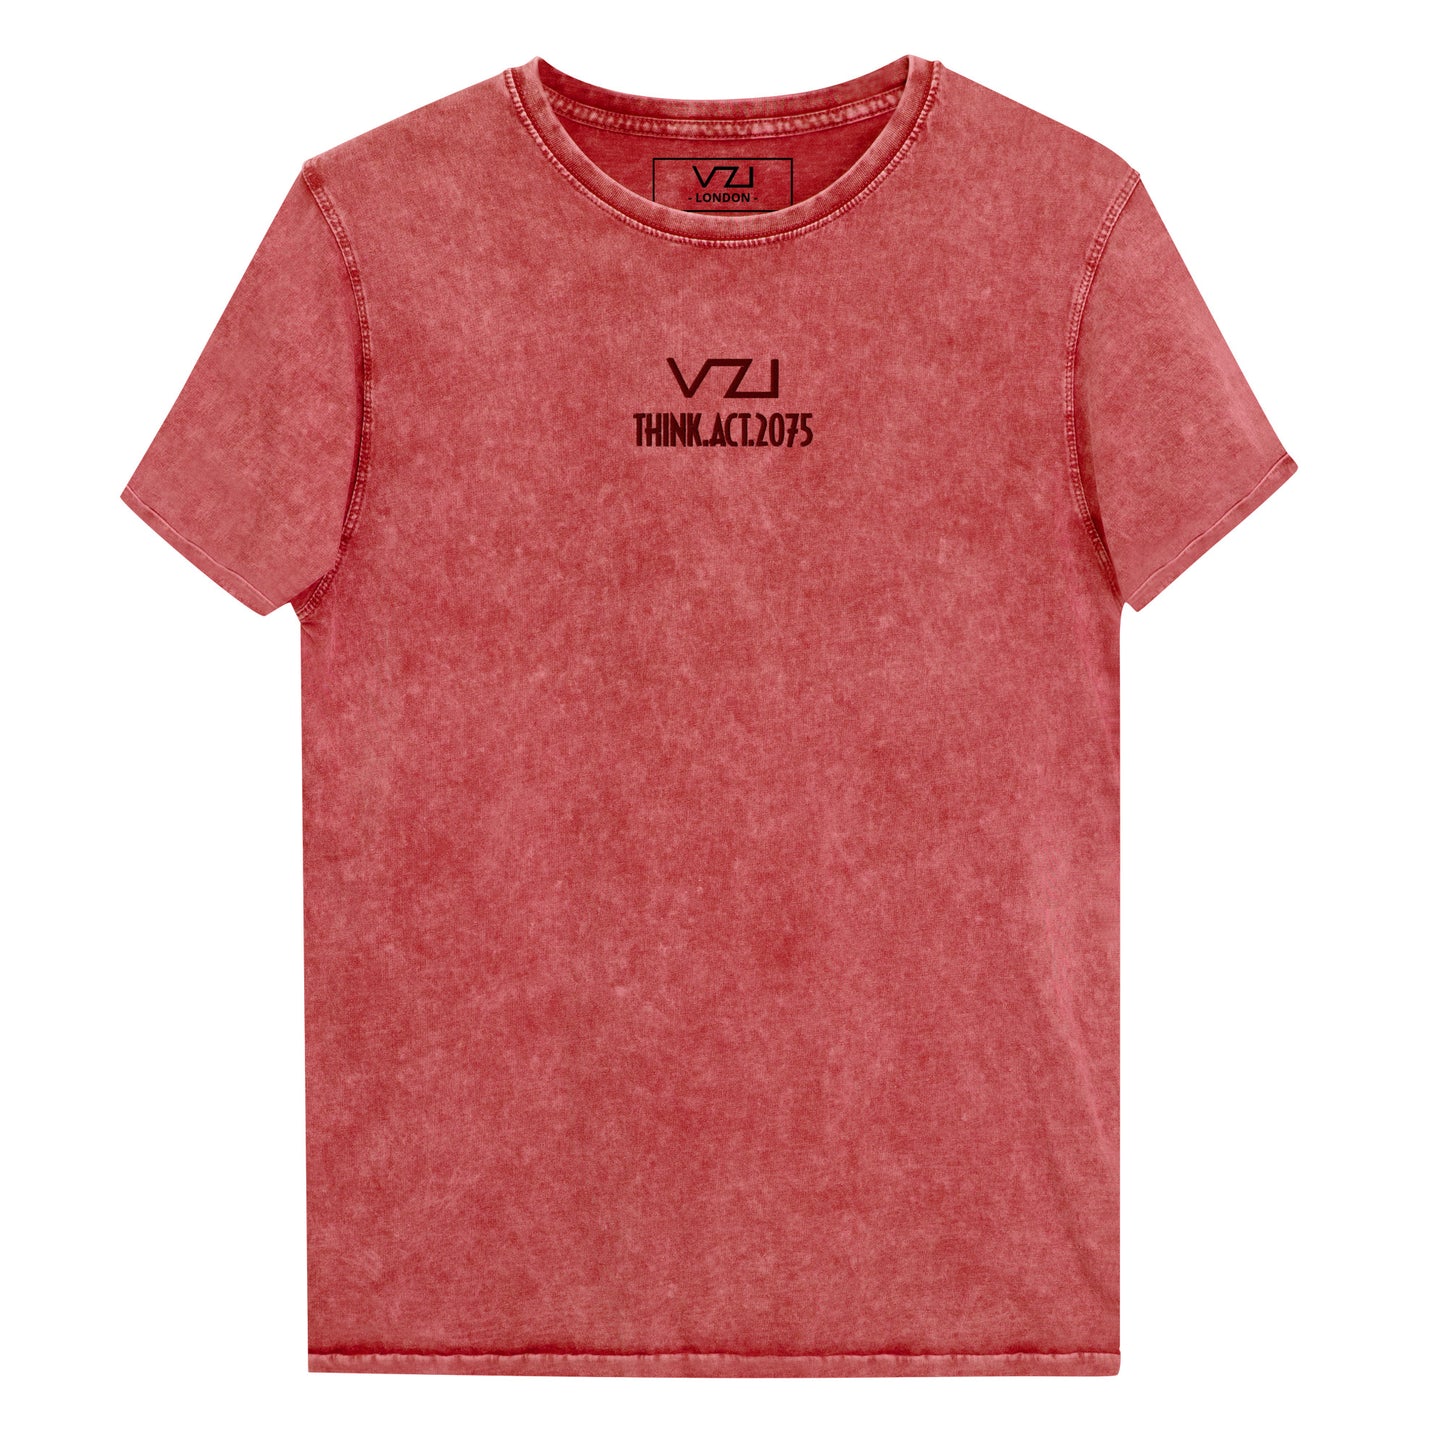 VZI T-Shirt - T-Shirt For Women's: Denim T-Shirt, Streetwear, Smart Casual, Jeans